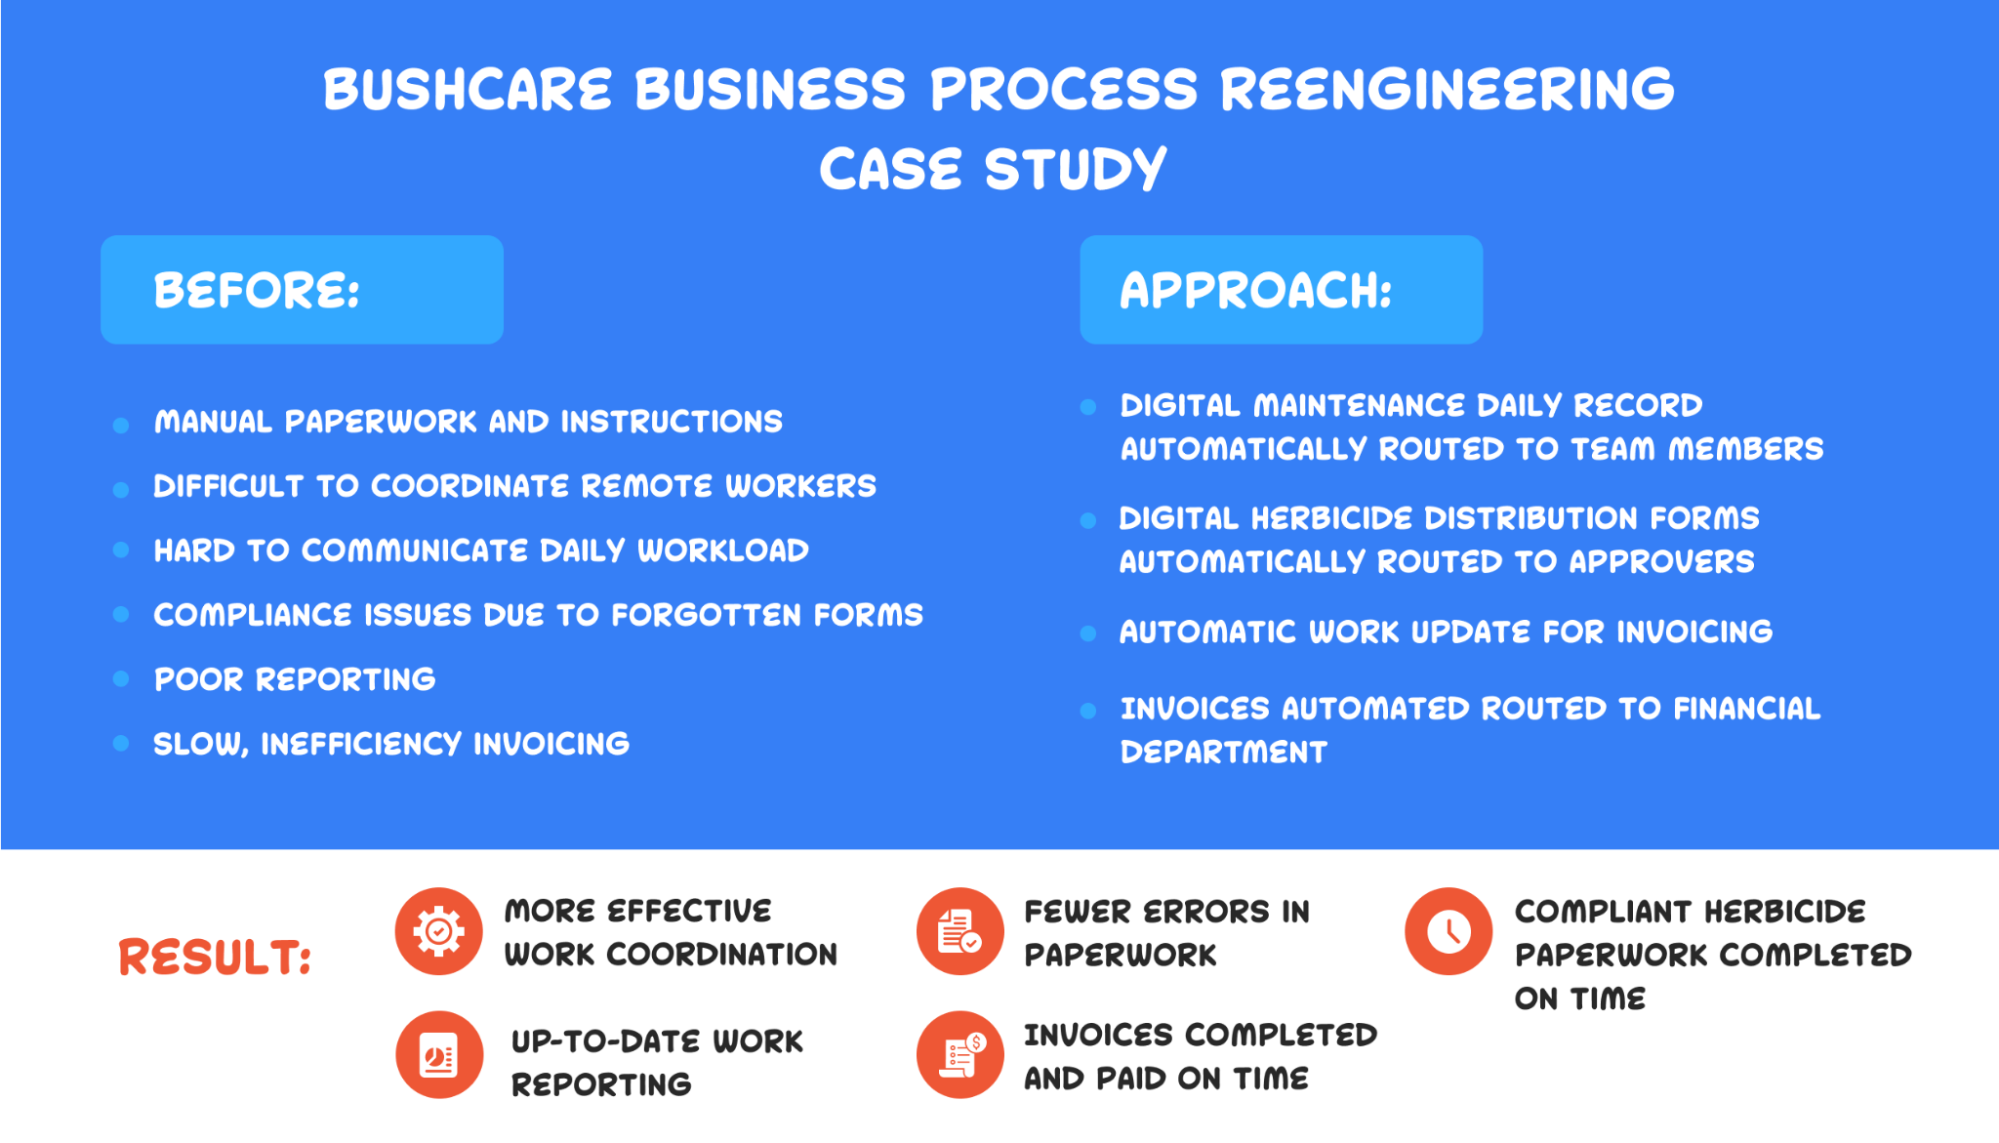 Bushcare business process reengineering case study